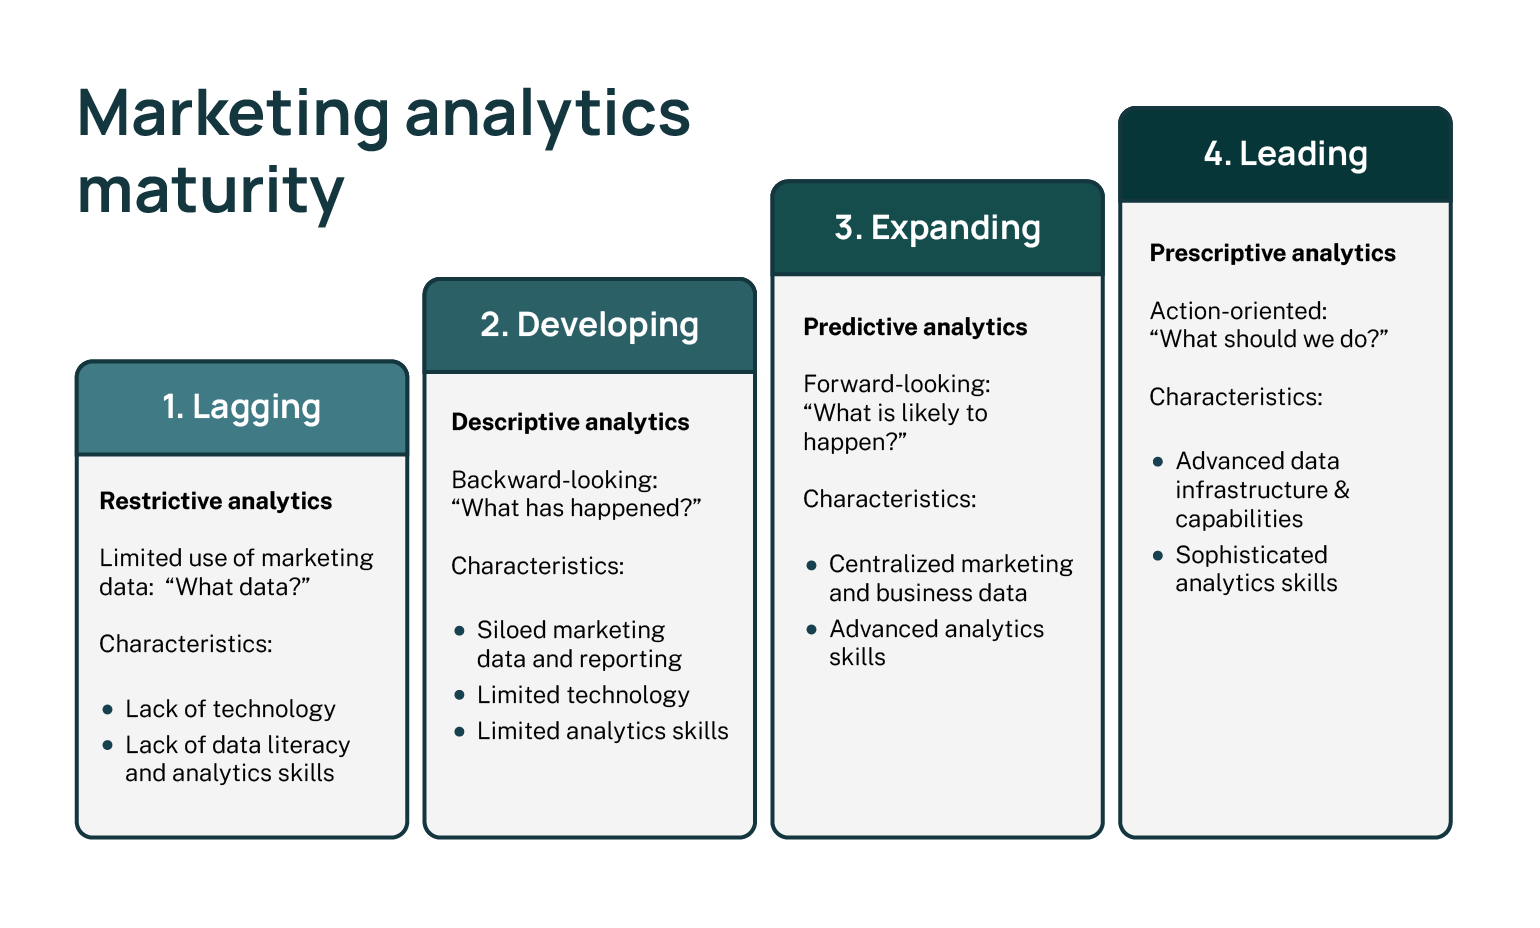 Marketing analytics maturity model. Lagging, developing, expanding, leading.